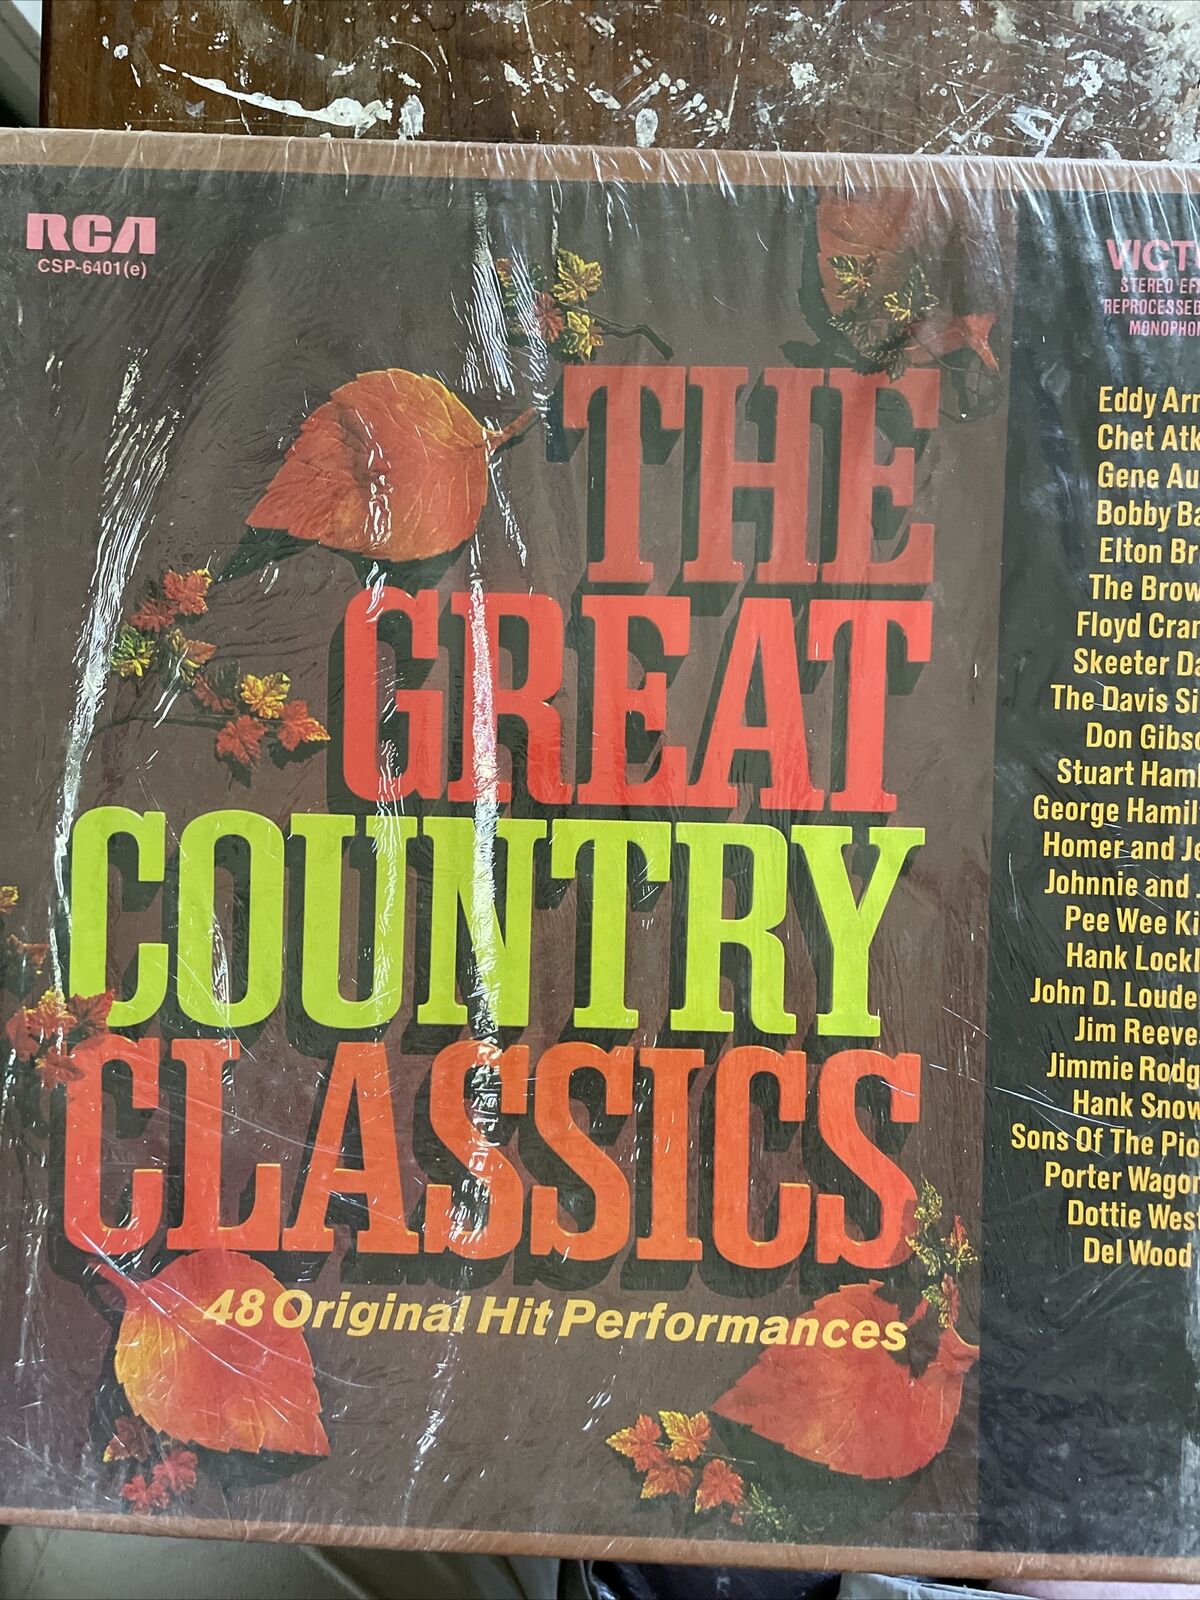 The Great Country Classics 48 Original Hit Performances 3 LP Set RCA CSP-6401e